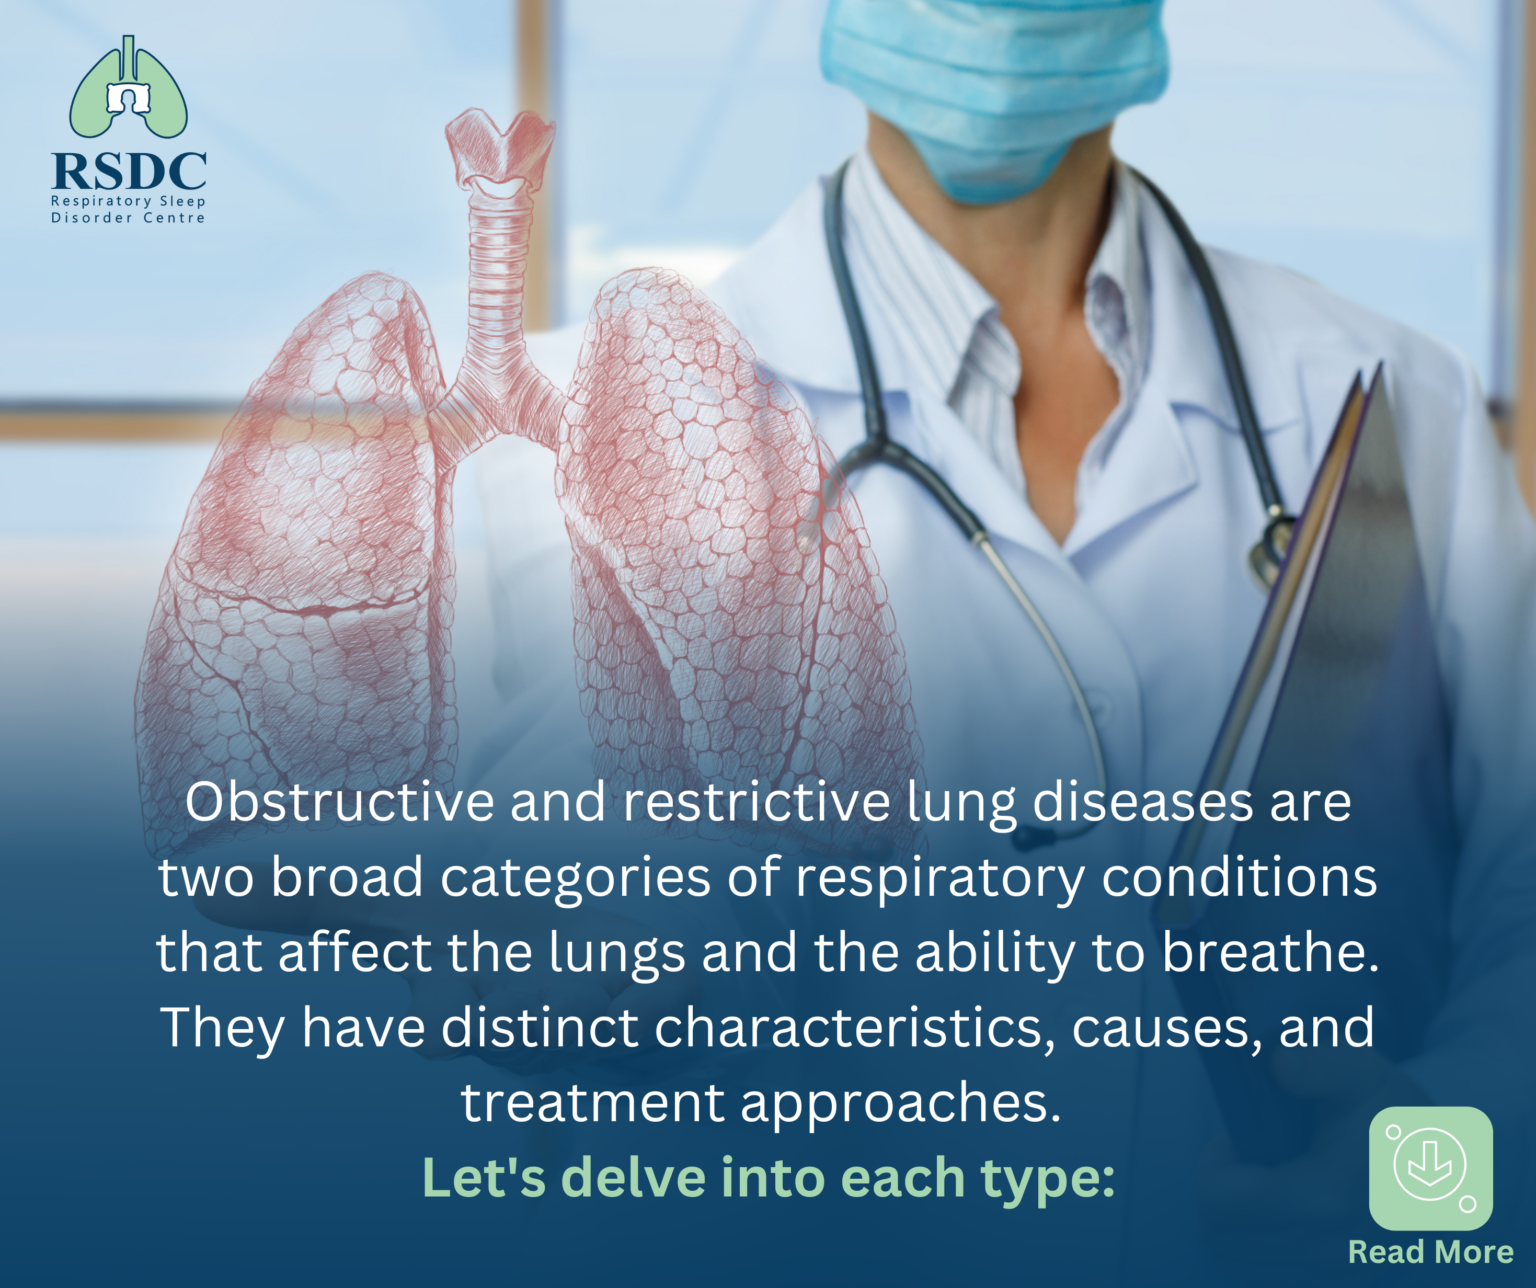 obstructive vs restrictive lung disease | RSDC